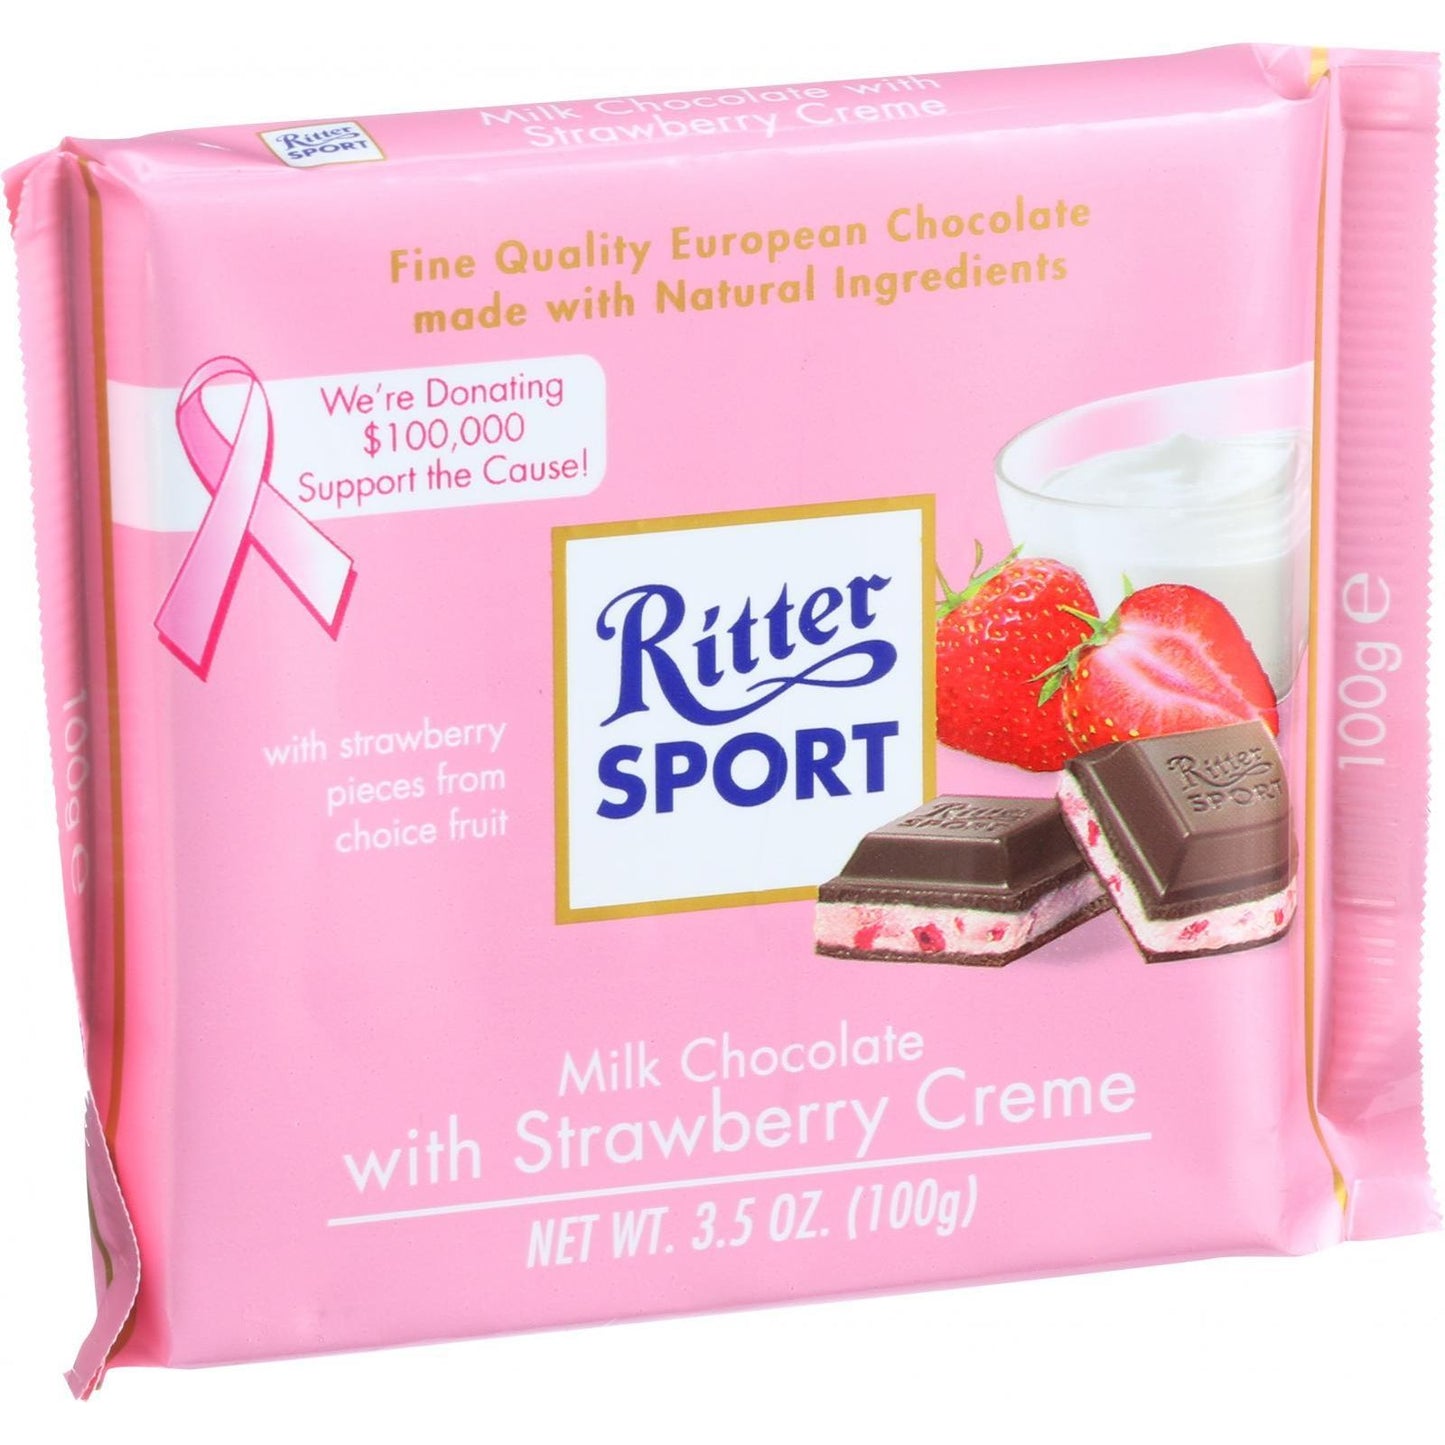 Ritter Sport Chocolate Bar - Milk Chocolate - Strawberry Creme - 3.5 Oz Bars - Case Of 12